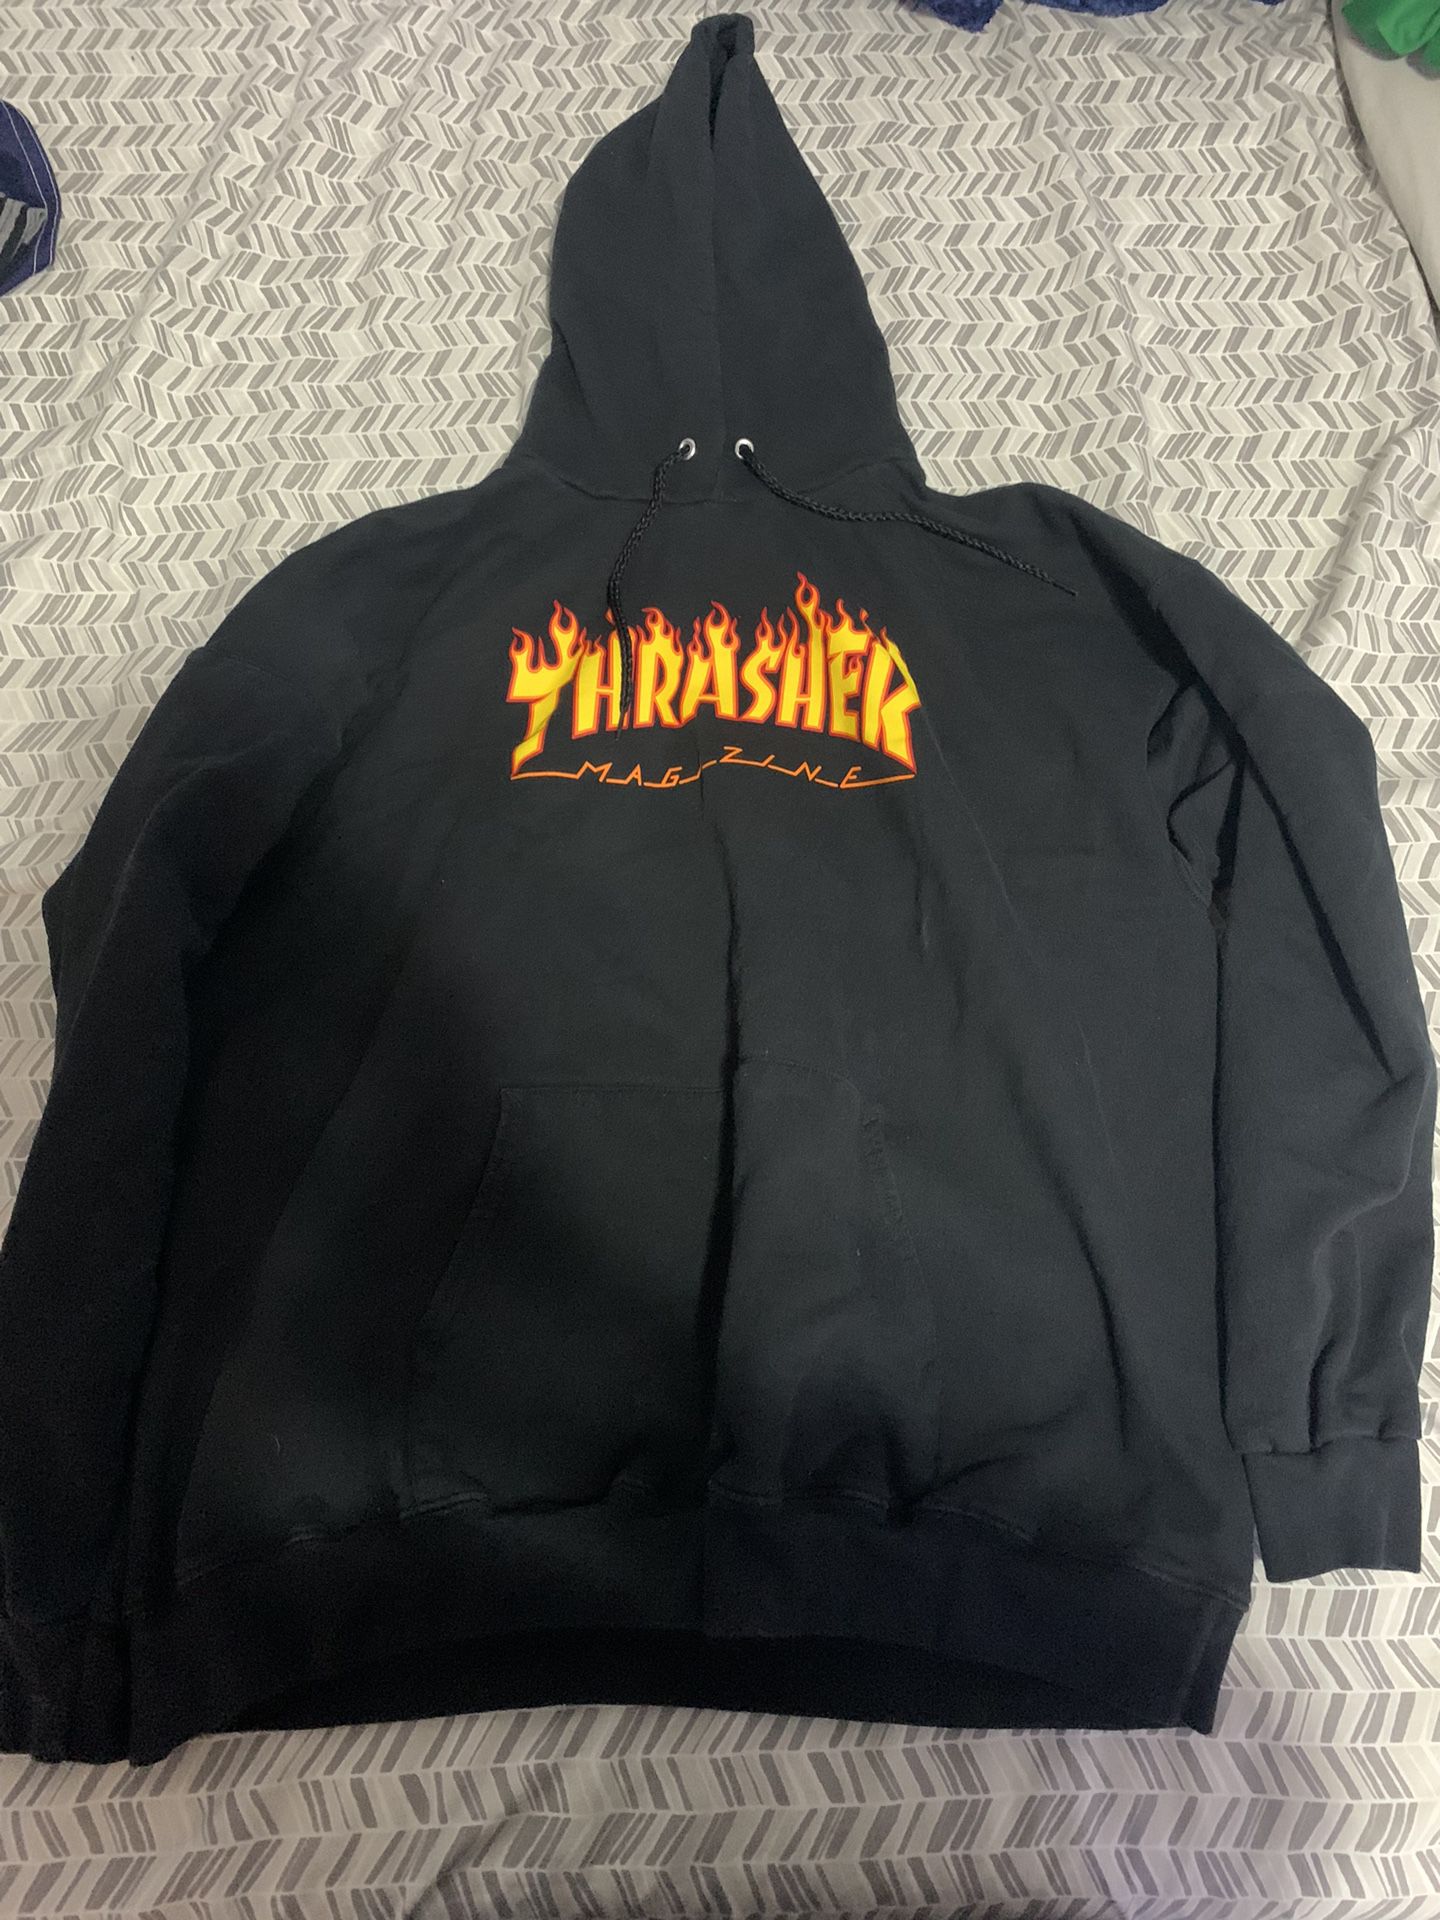 Xl Black Thrasher sweatshirt